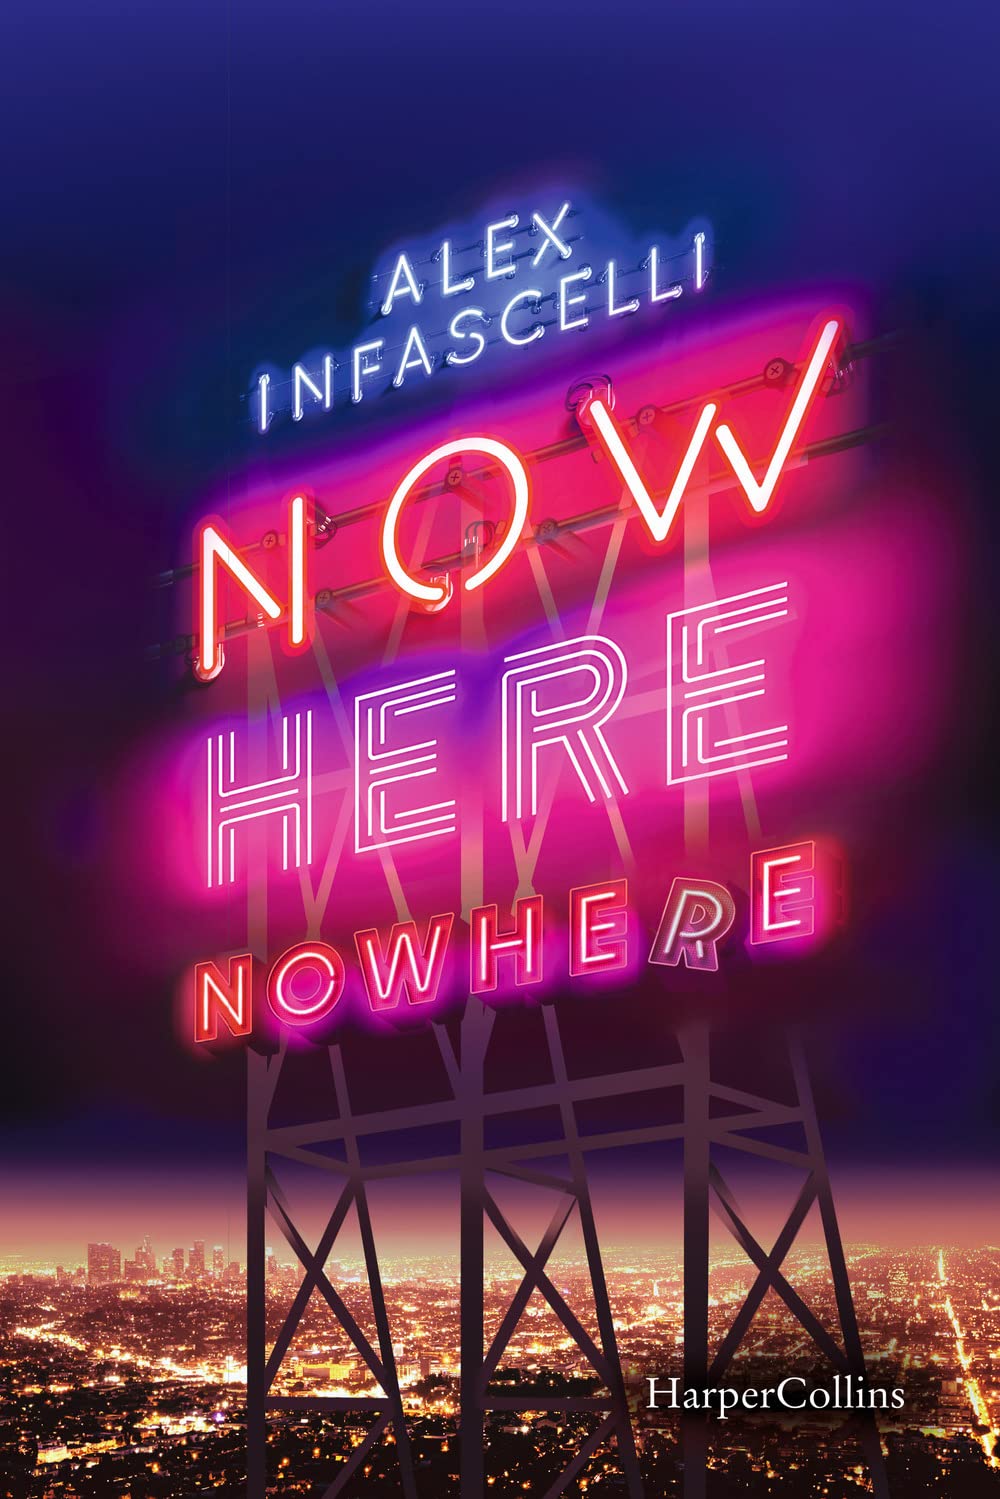 Recensione di Now Here Nowhere – Alex Infascelli